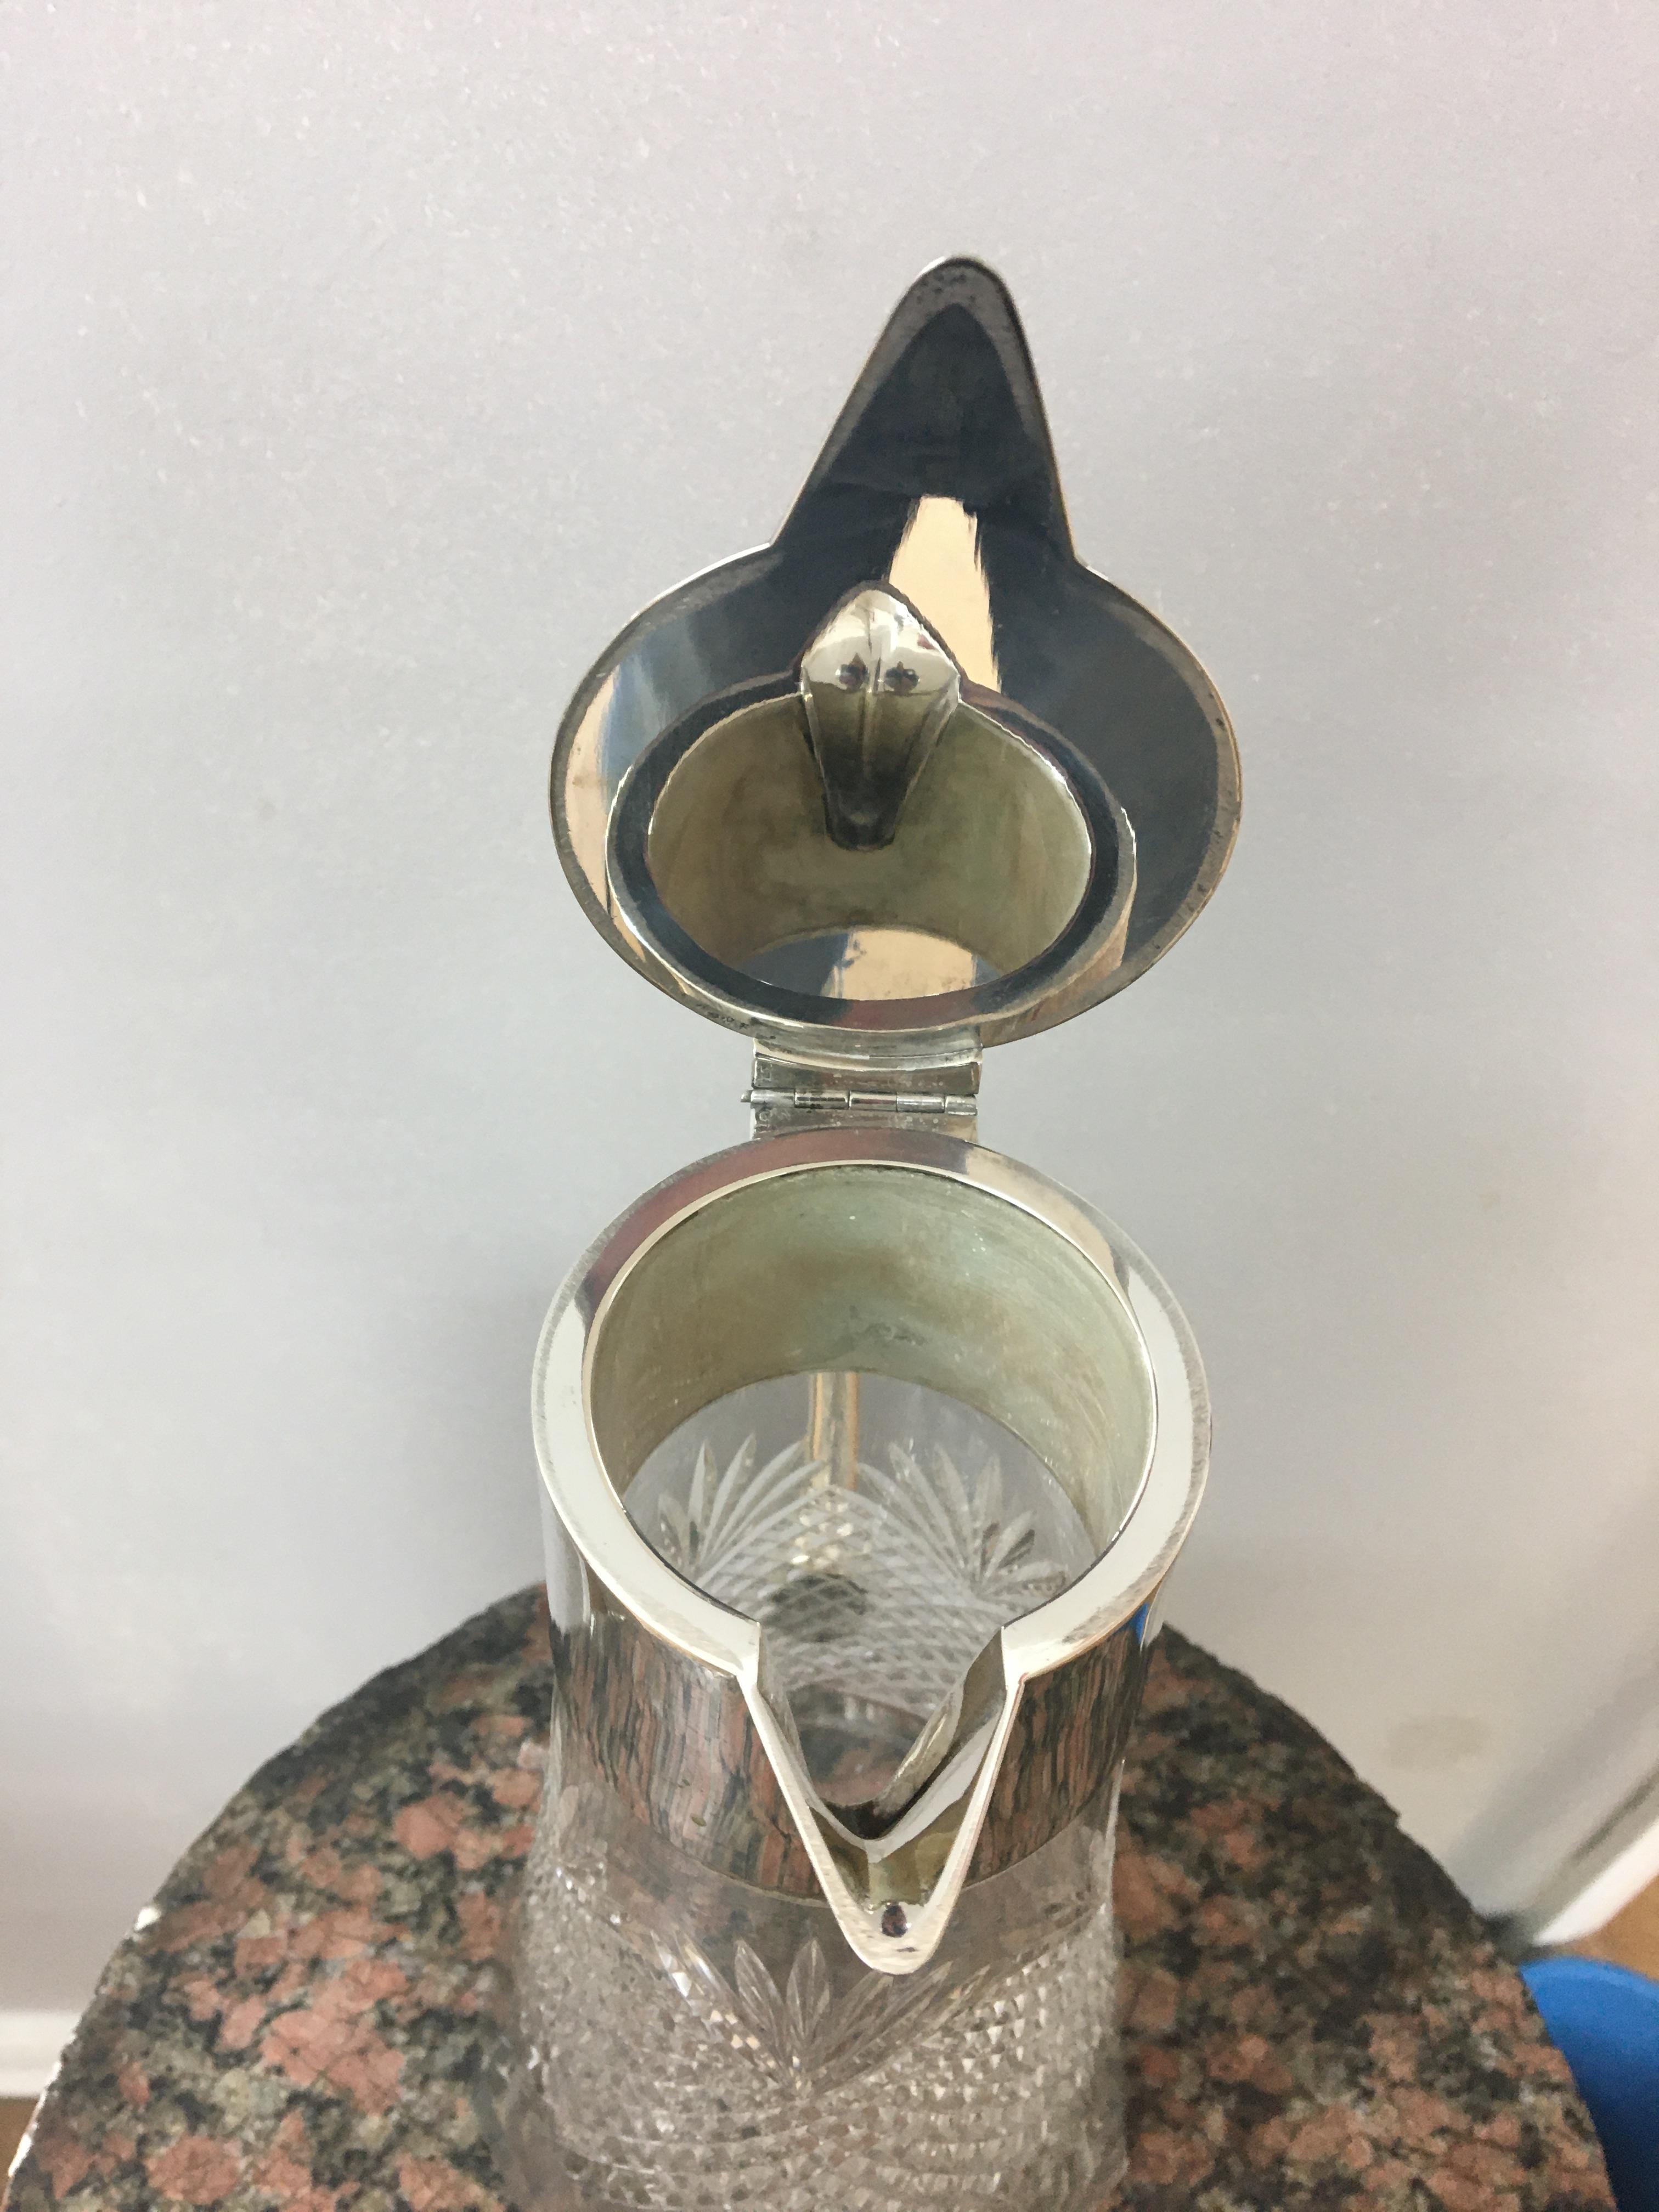 Continental Silver .800 silver topped claret jug maker marked "Gerr Friediander", 26 cm high. - Image 3 of 3